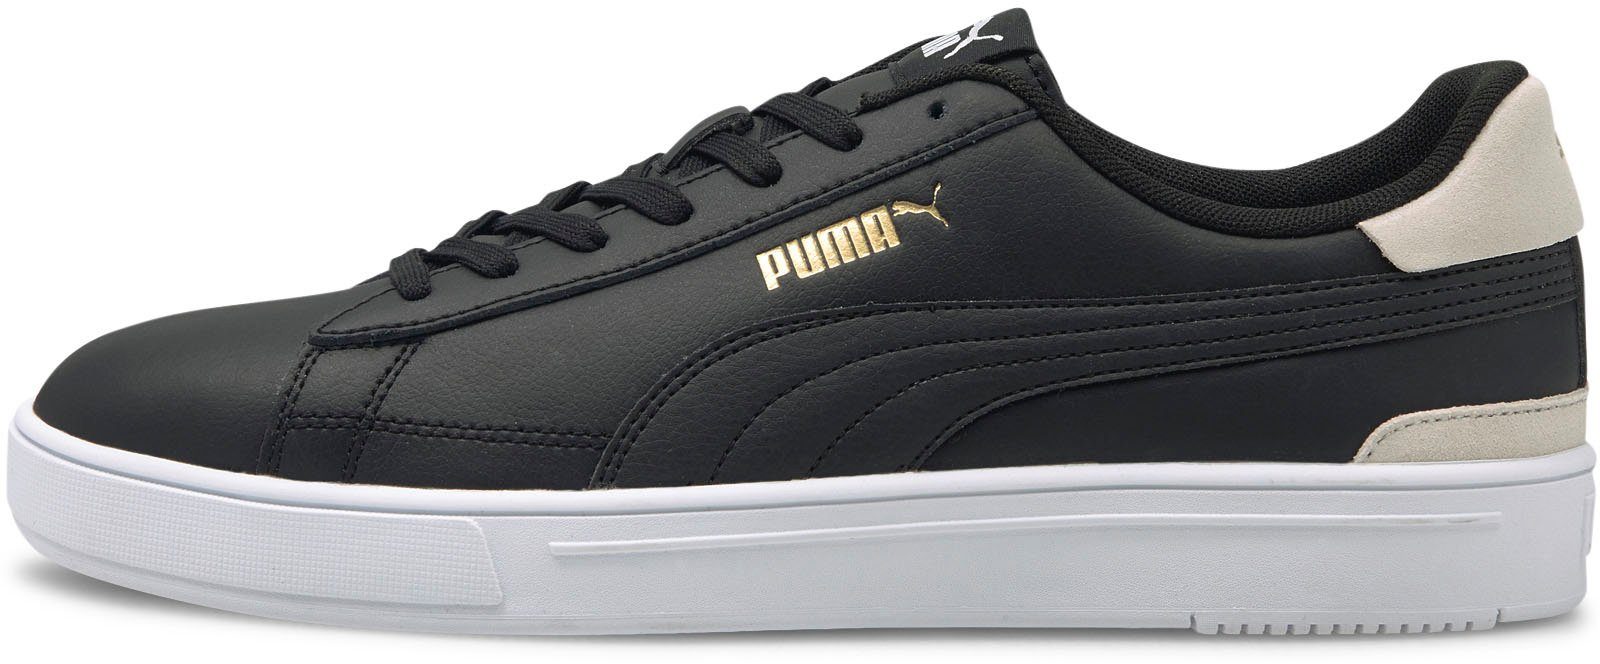 Puma Smash PUMA schwarz-weiß Sneaker Pro